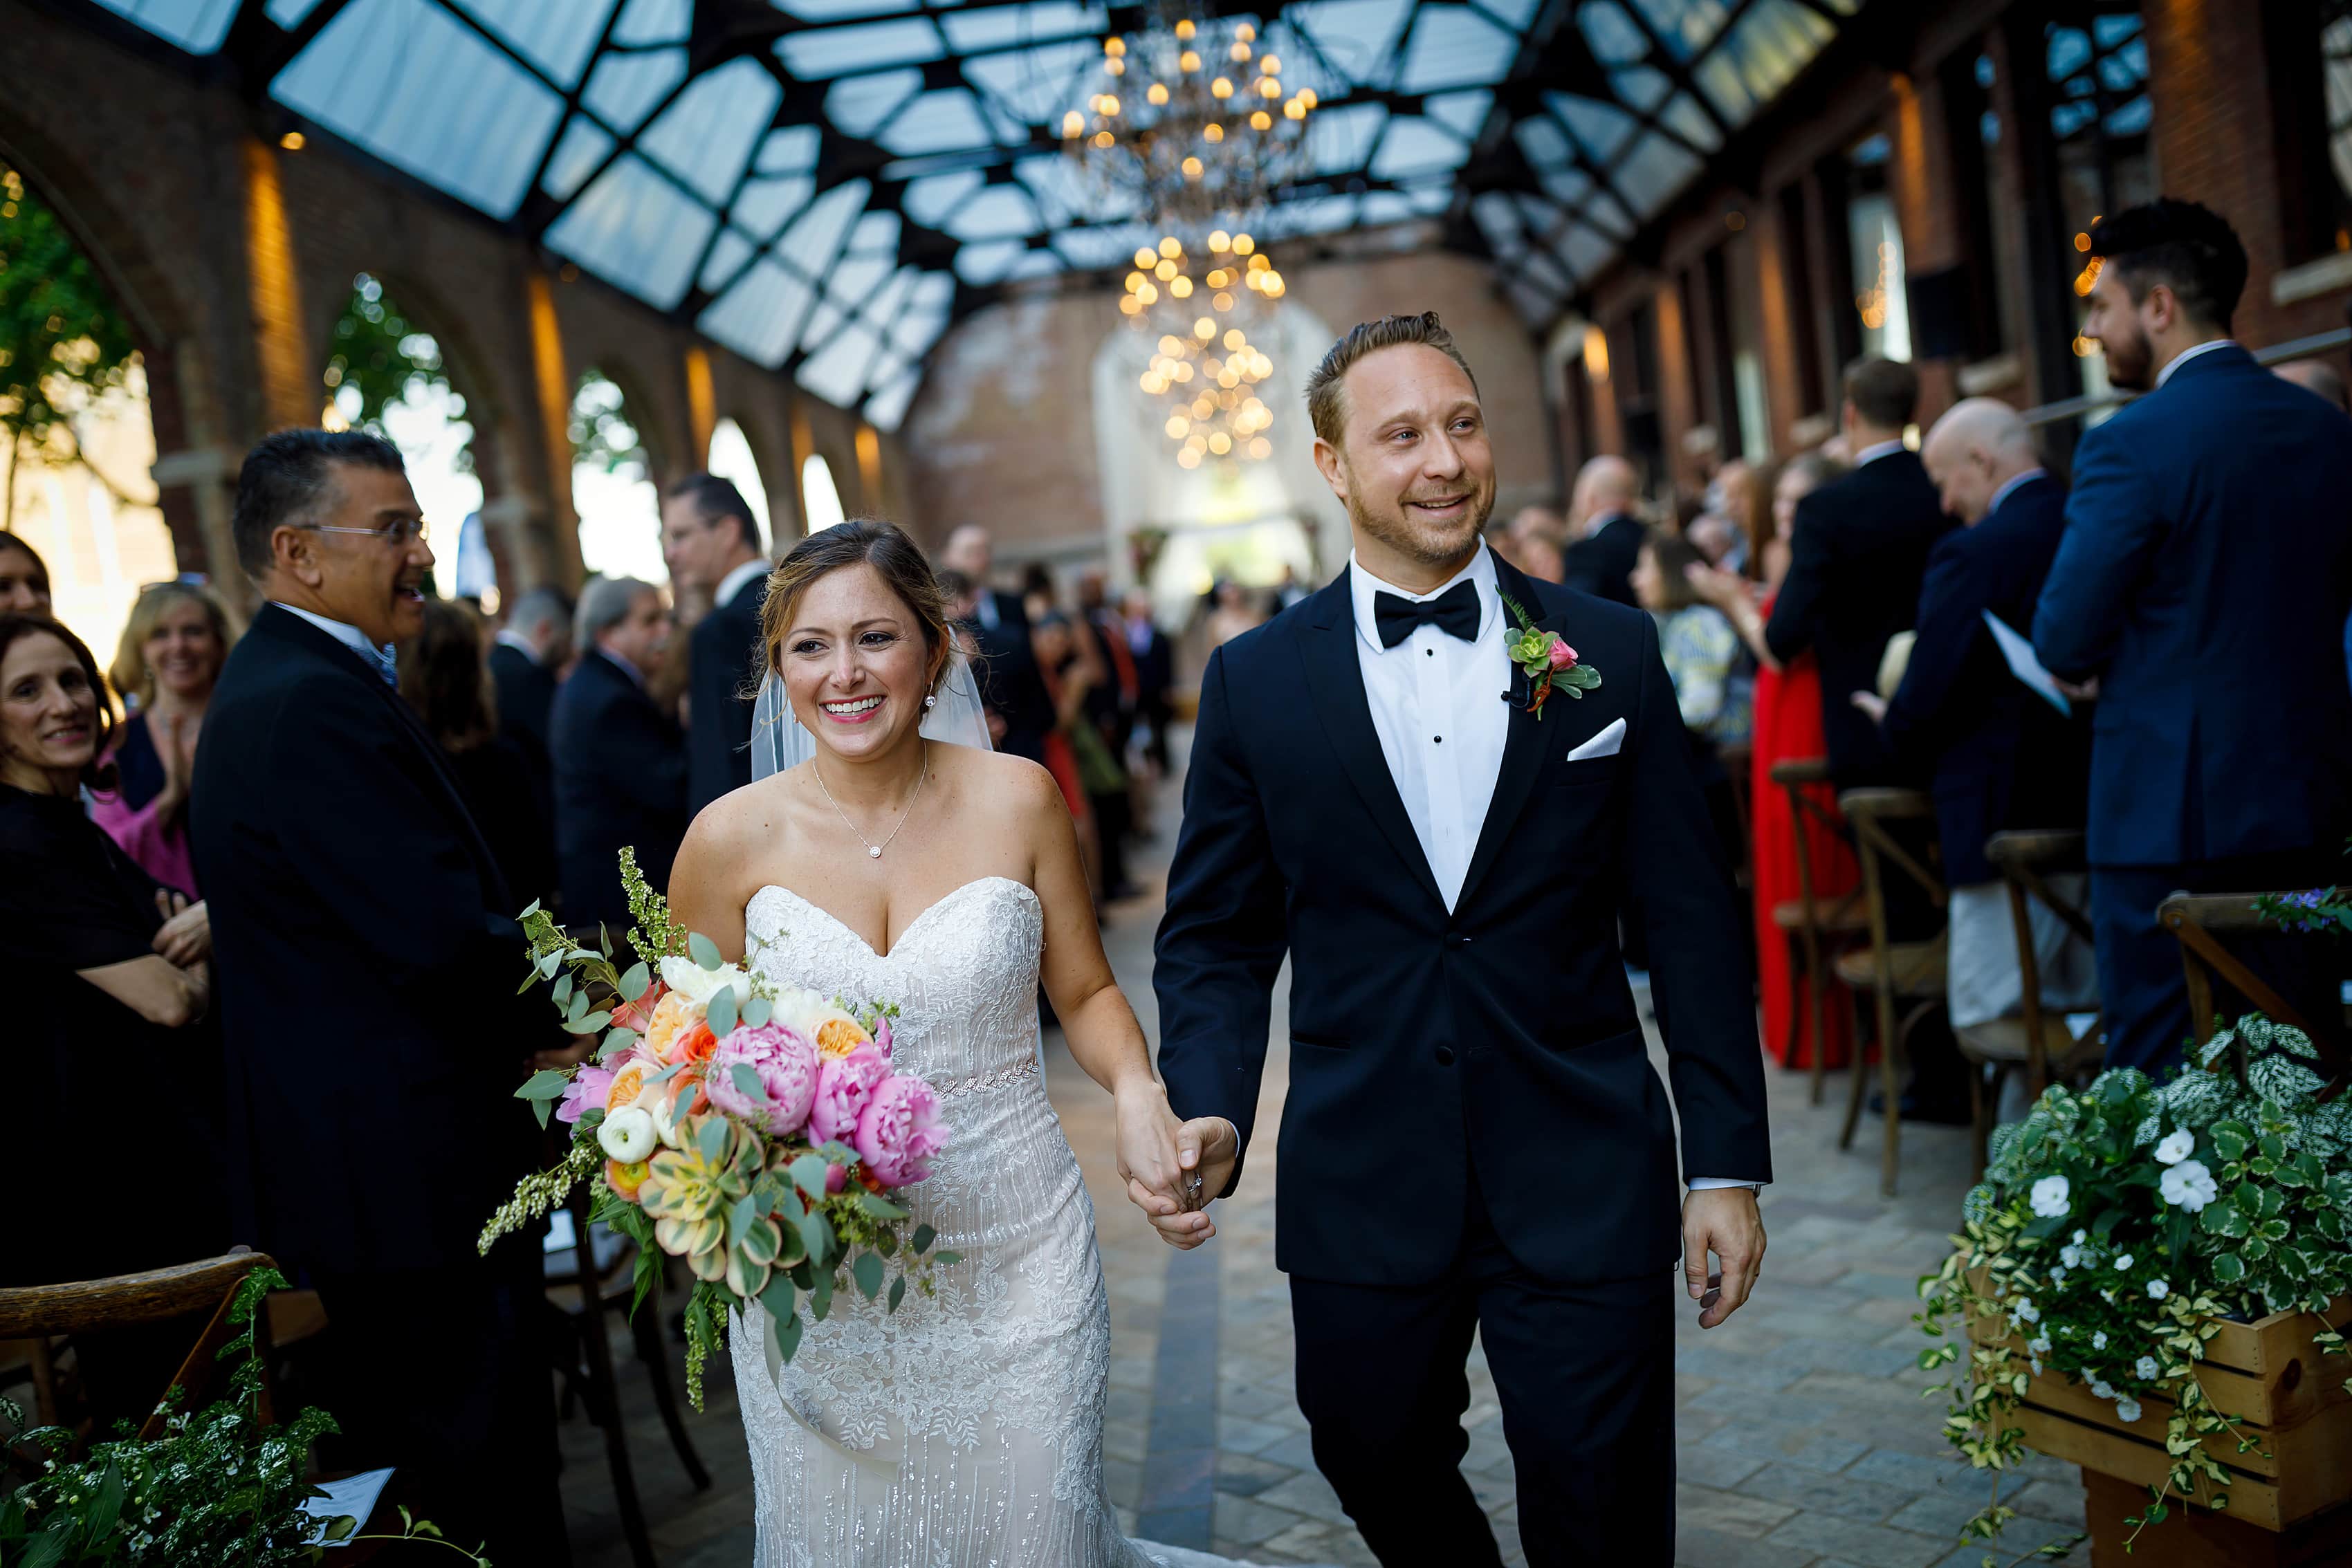 bride and groom walk back down the aisle after wedding ceremony at Bridgeport Art Center Sculpture Garden in Chicago